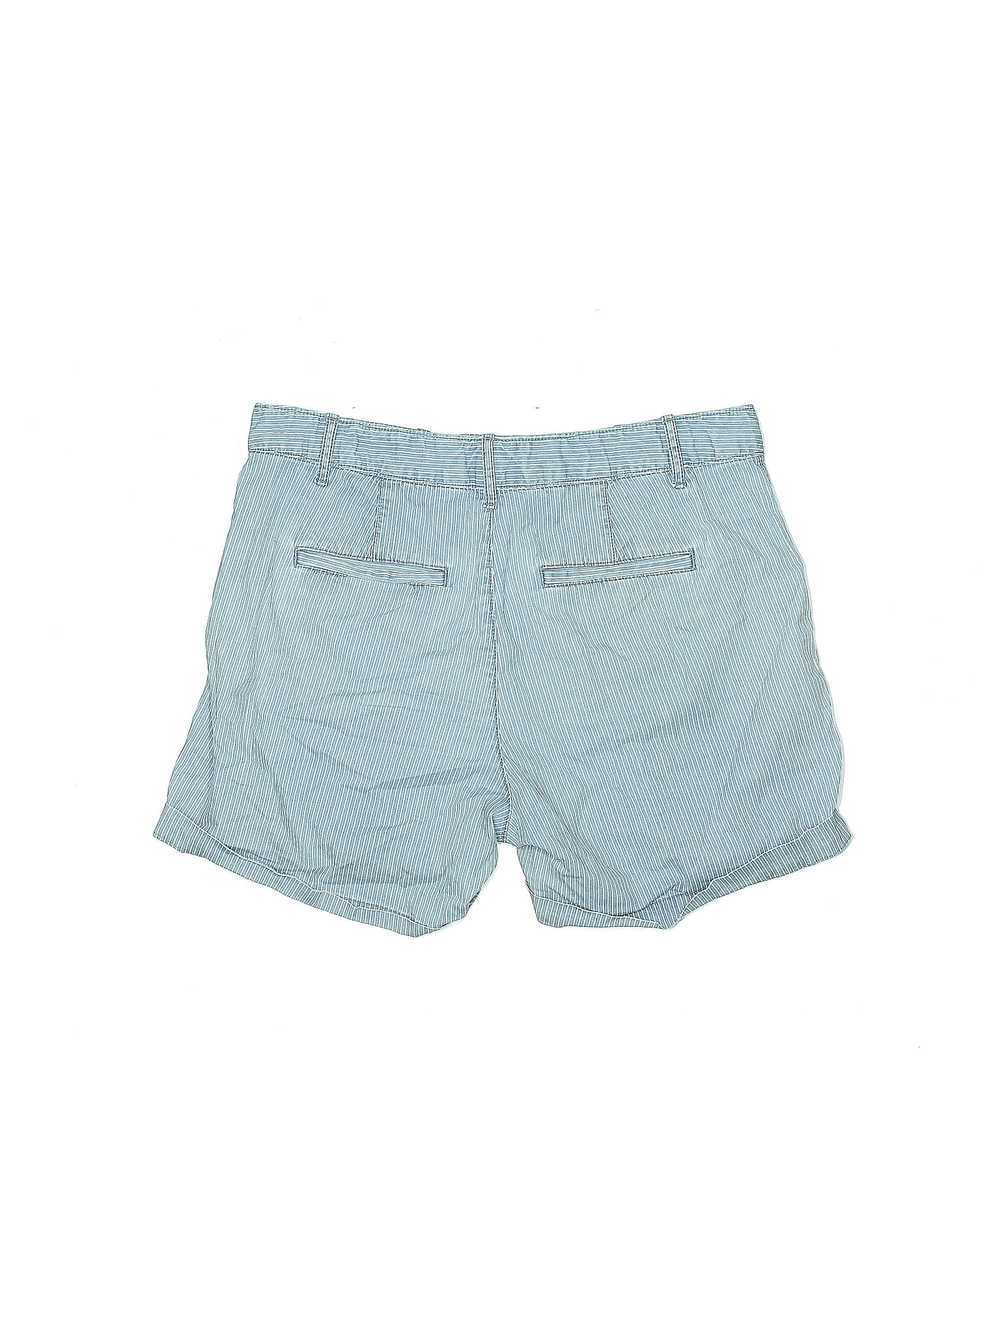 Gap Women Blue Khaki Shorts 10 - image 2